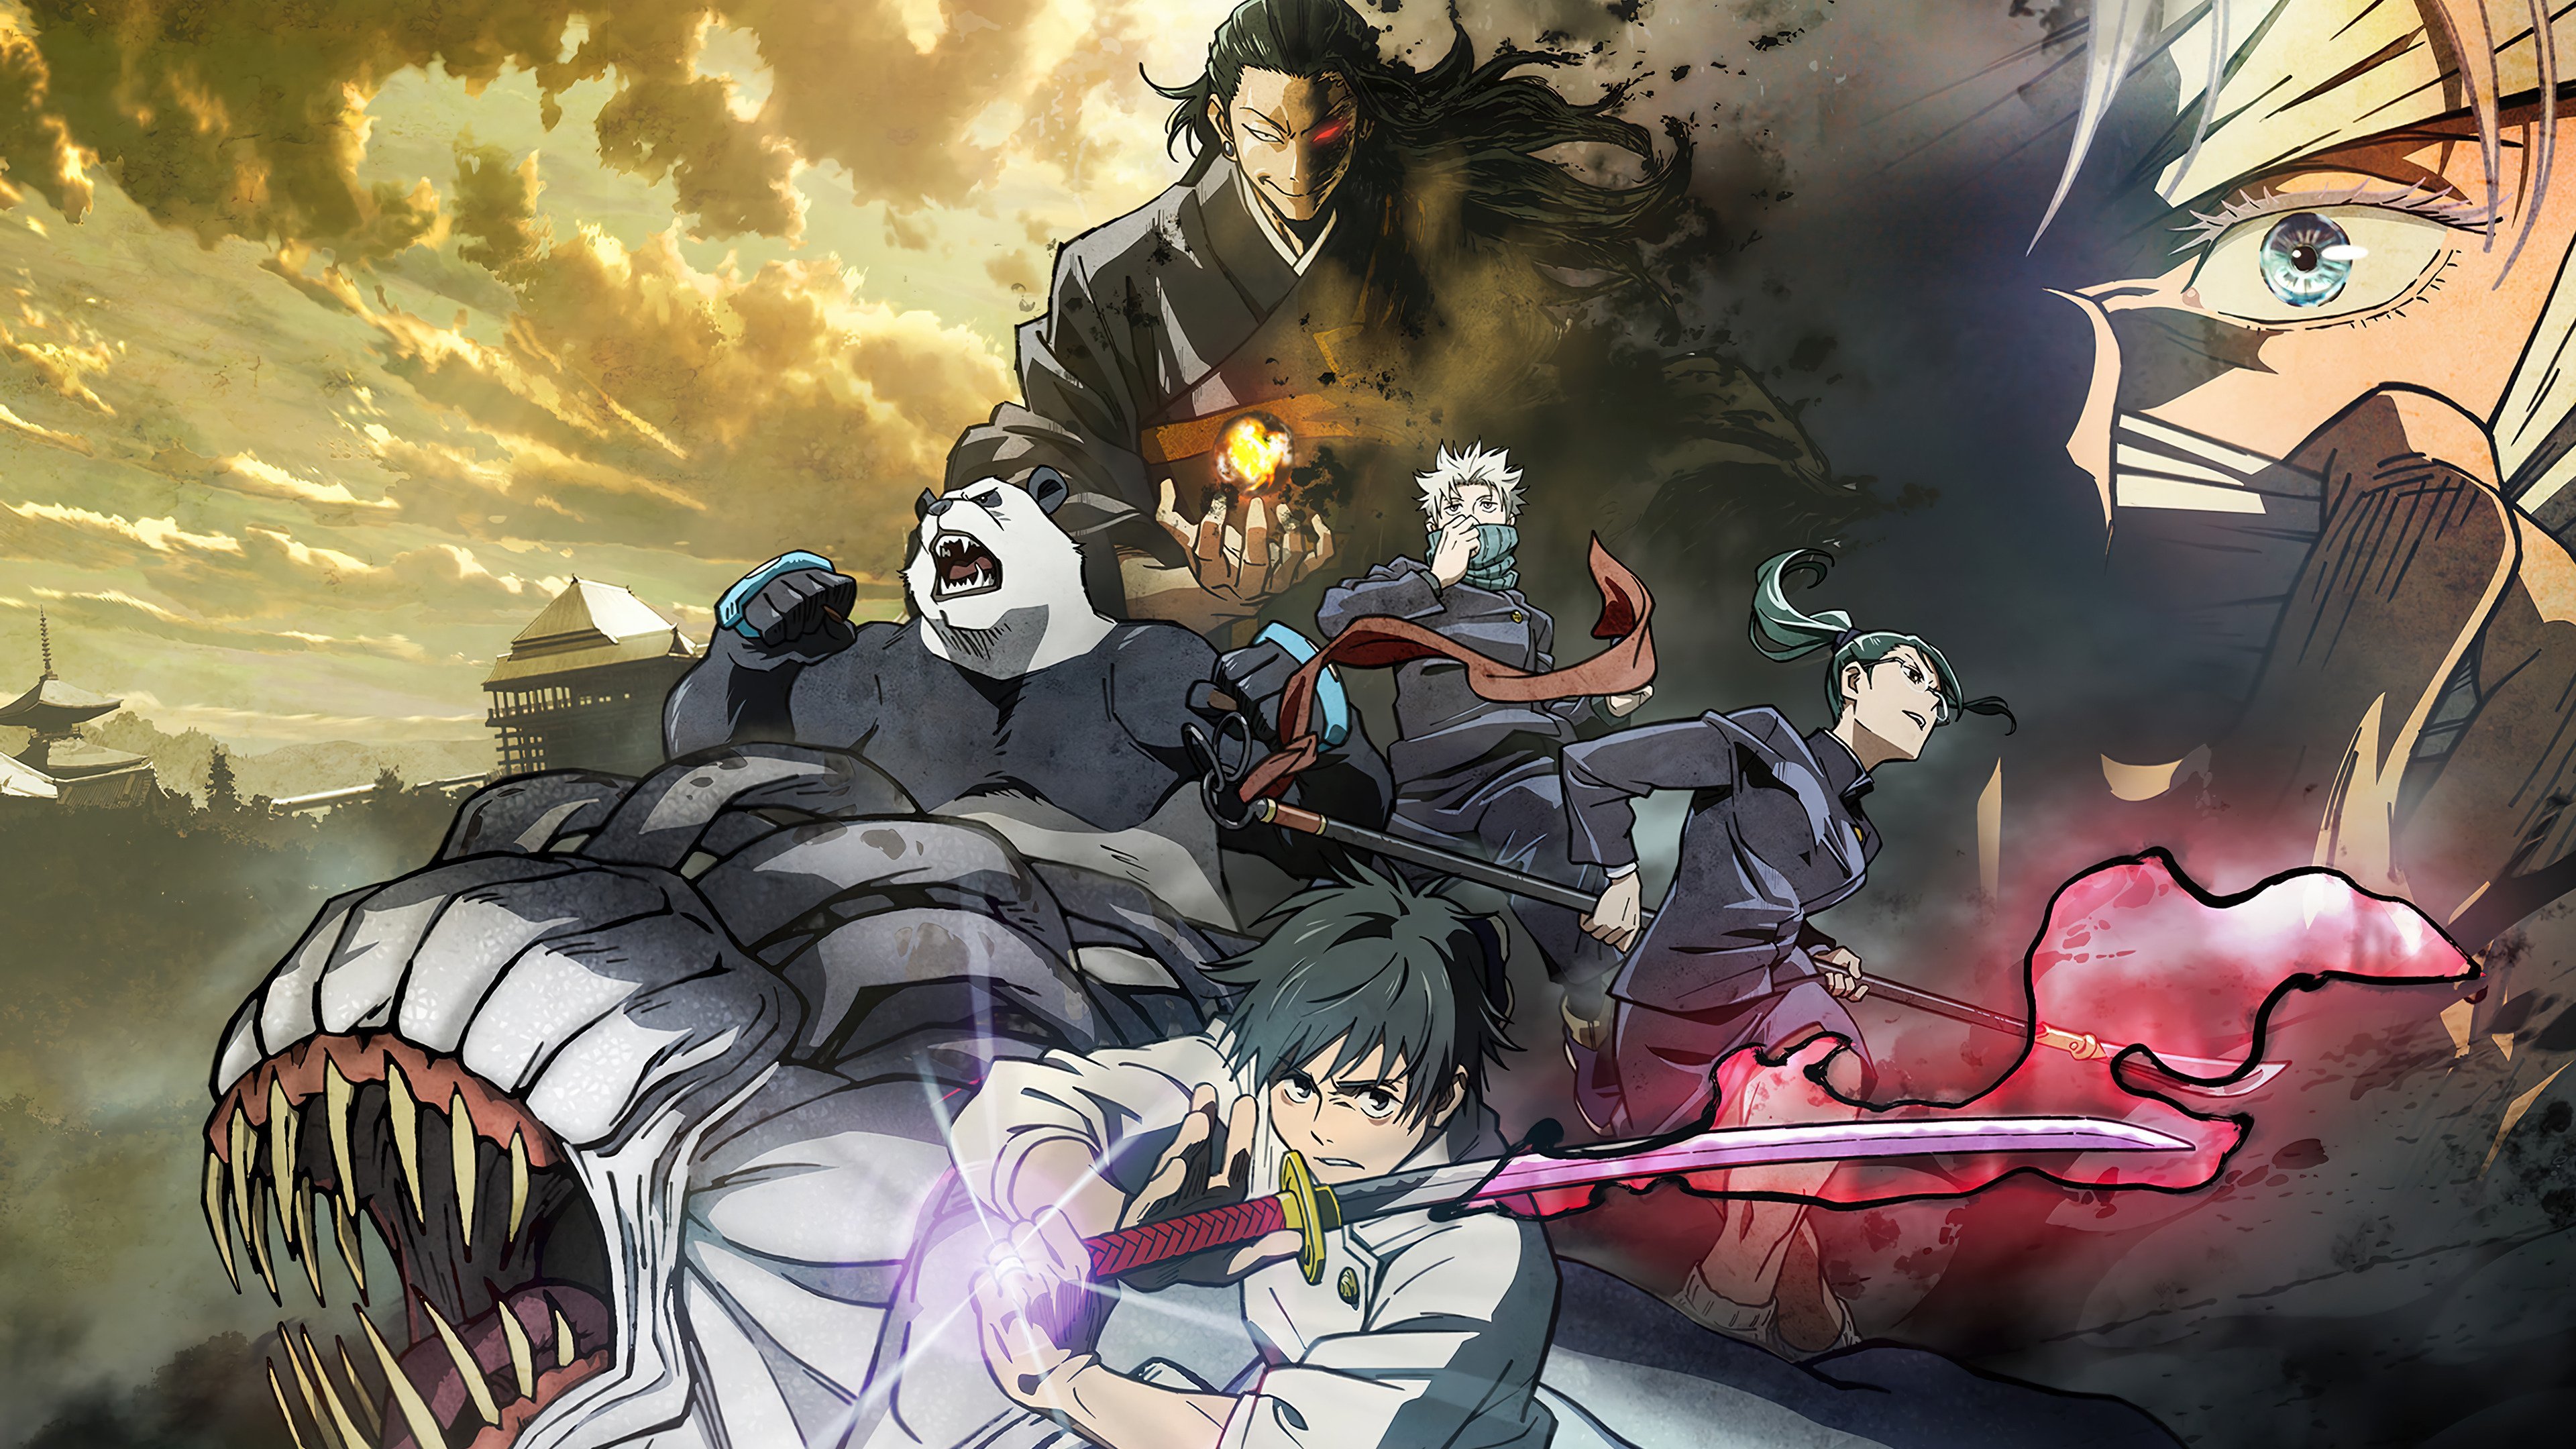 Jujutsu Kaisen 4K & HD Anime Wallpaper background APK voor Android Download